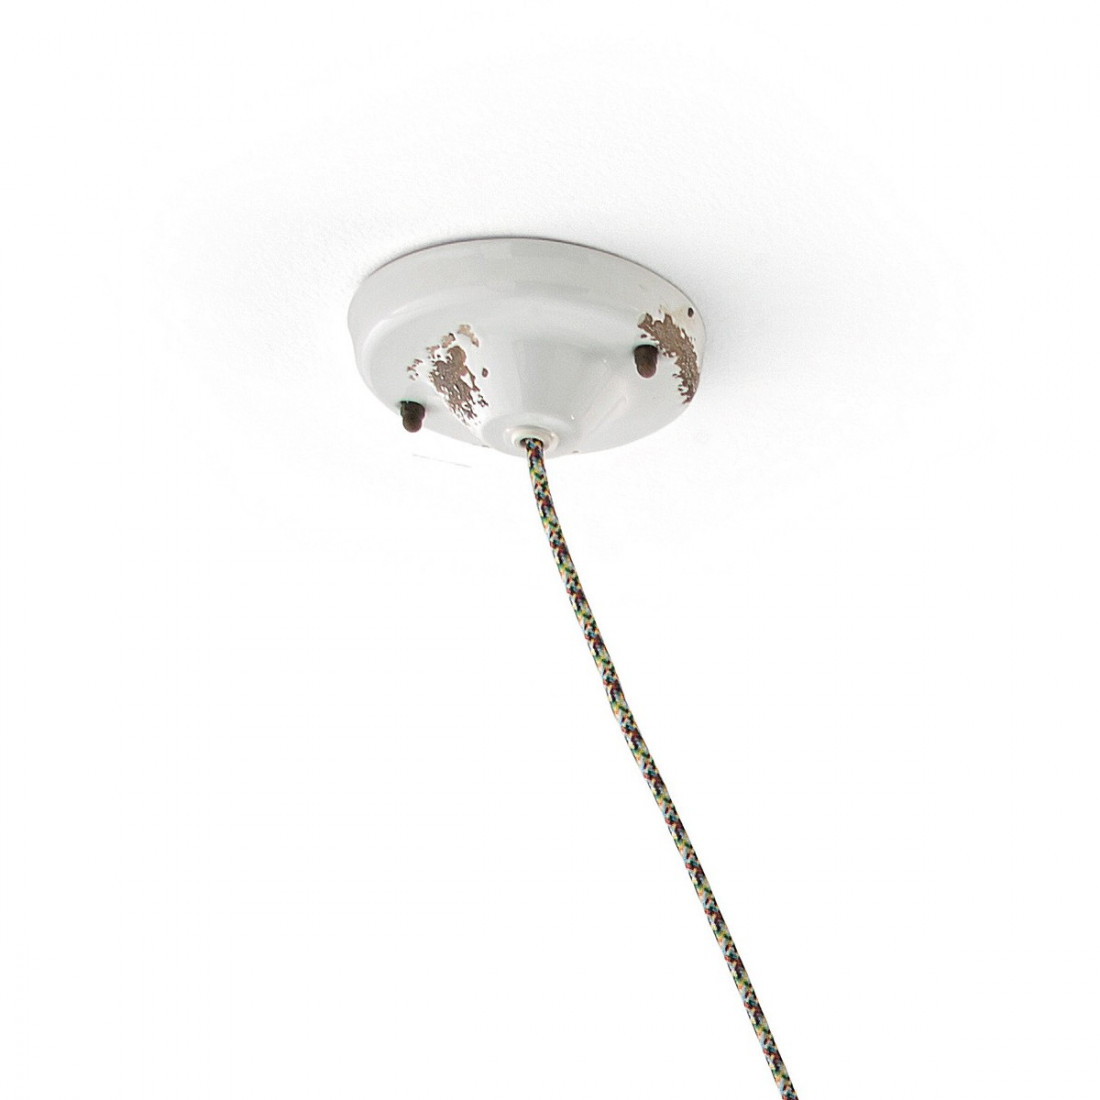 Applique FE-URBAN RETRO C1523 E27 LED treccia ceramica artigianale vetro lampada parete classica rustica interno